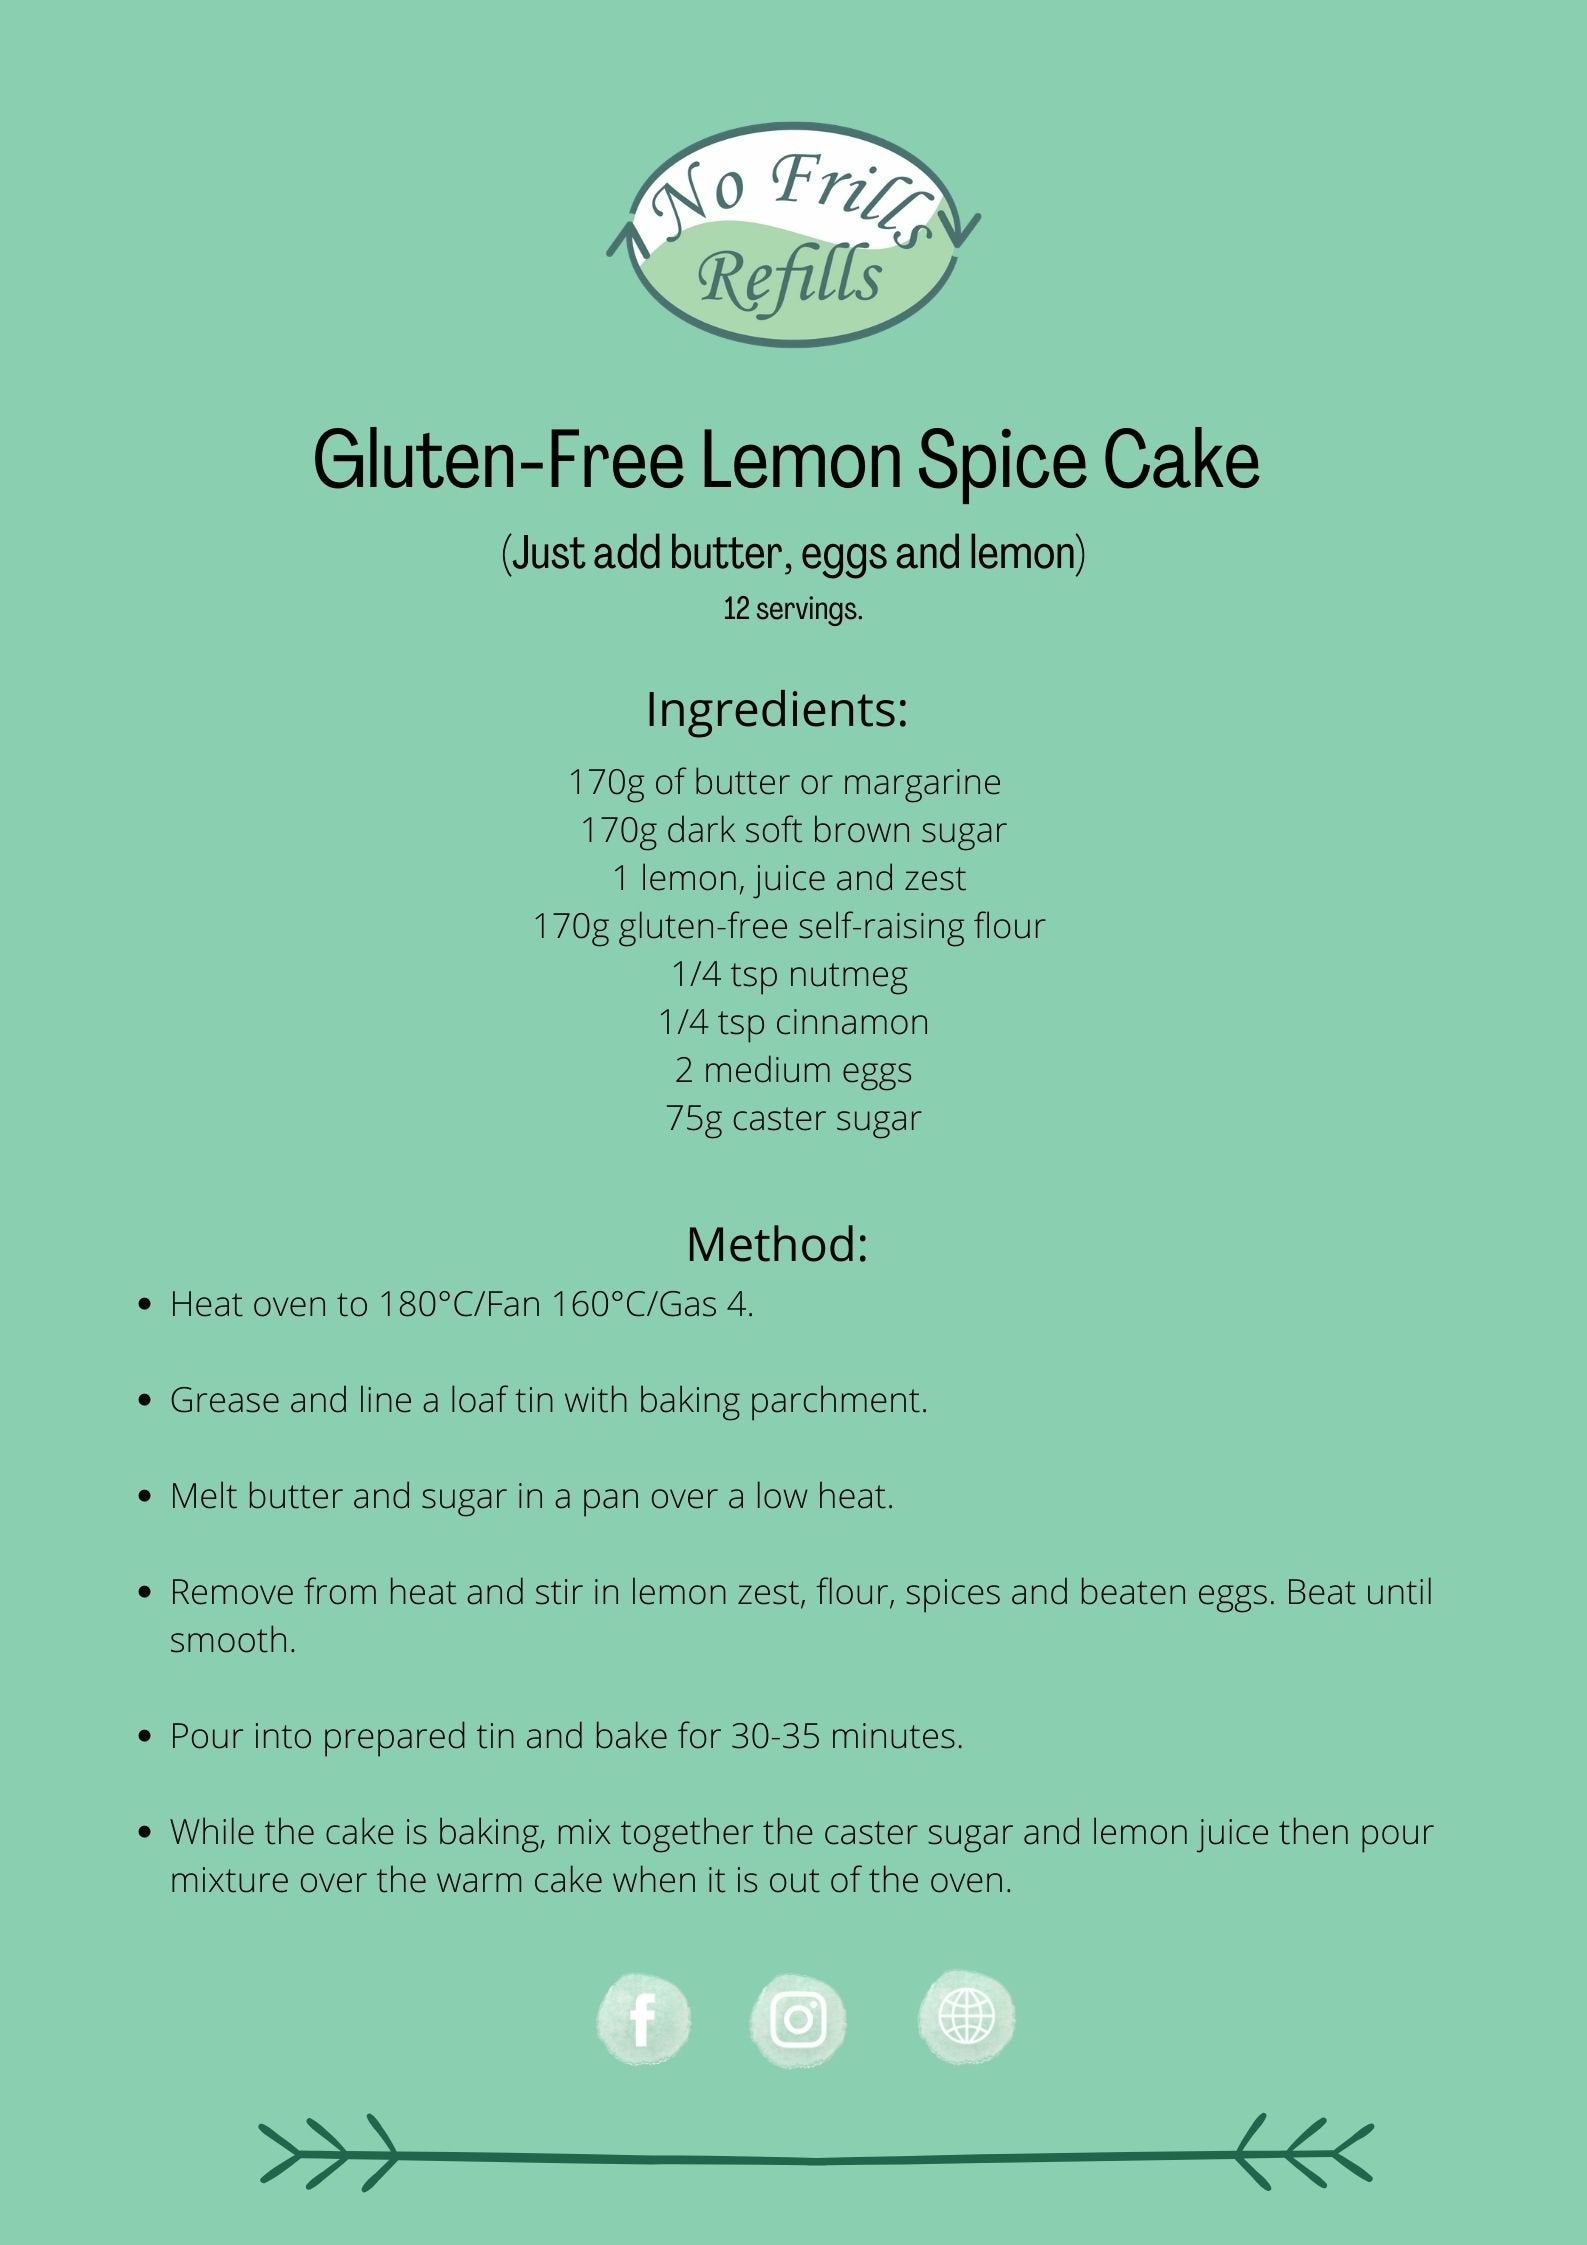 No Frills Gluten-Free Lemon Spice Cake Kit.